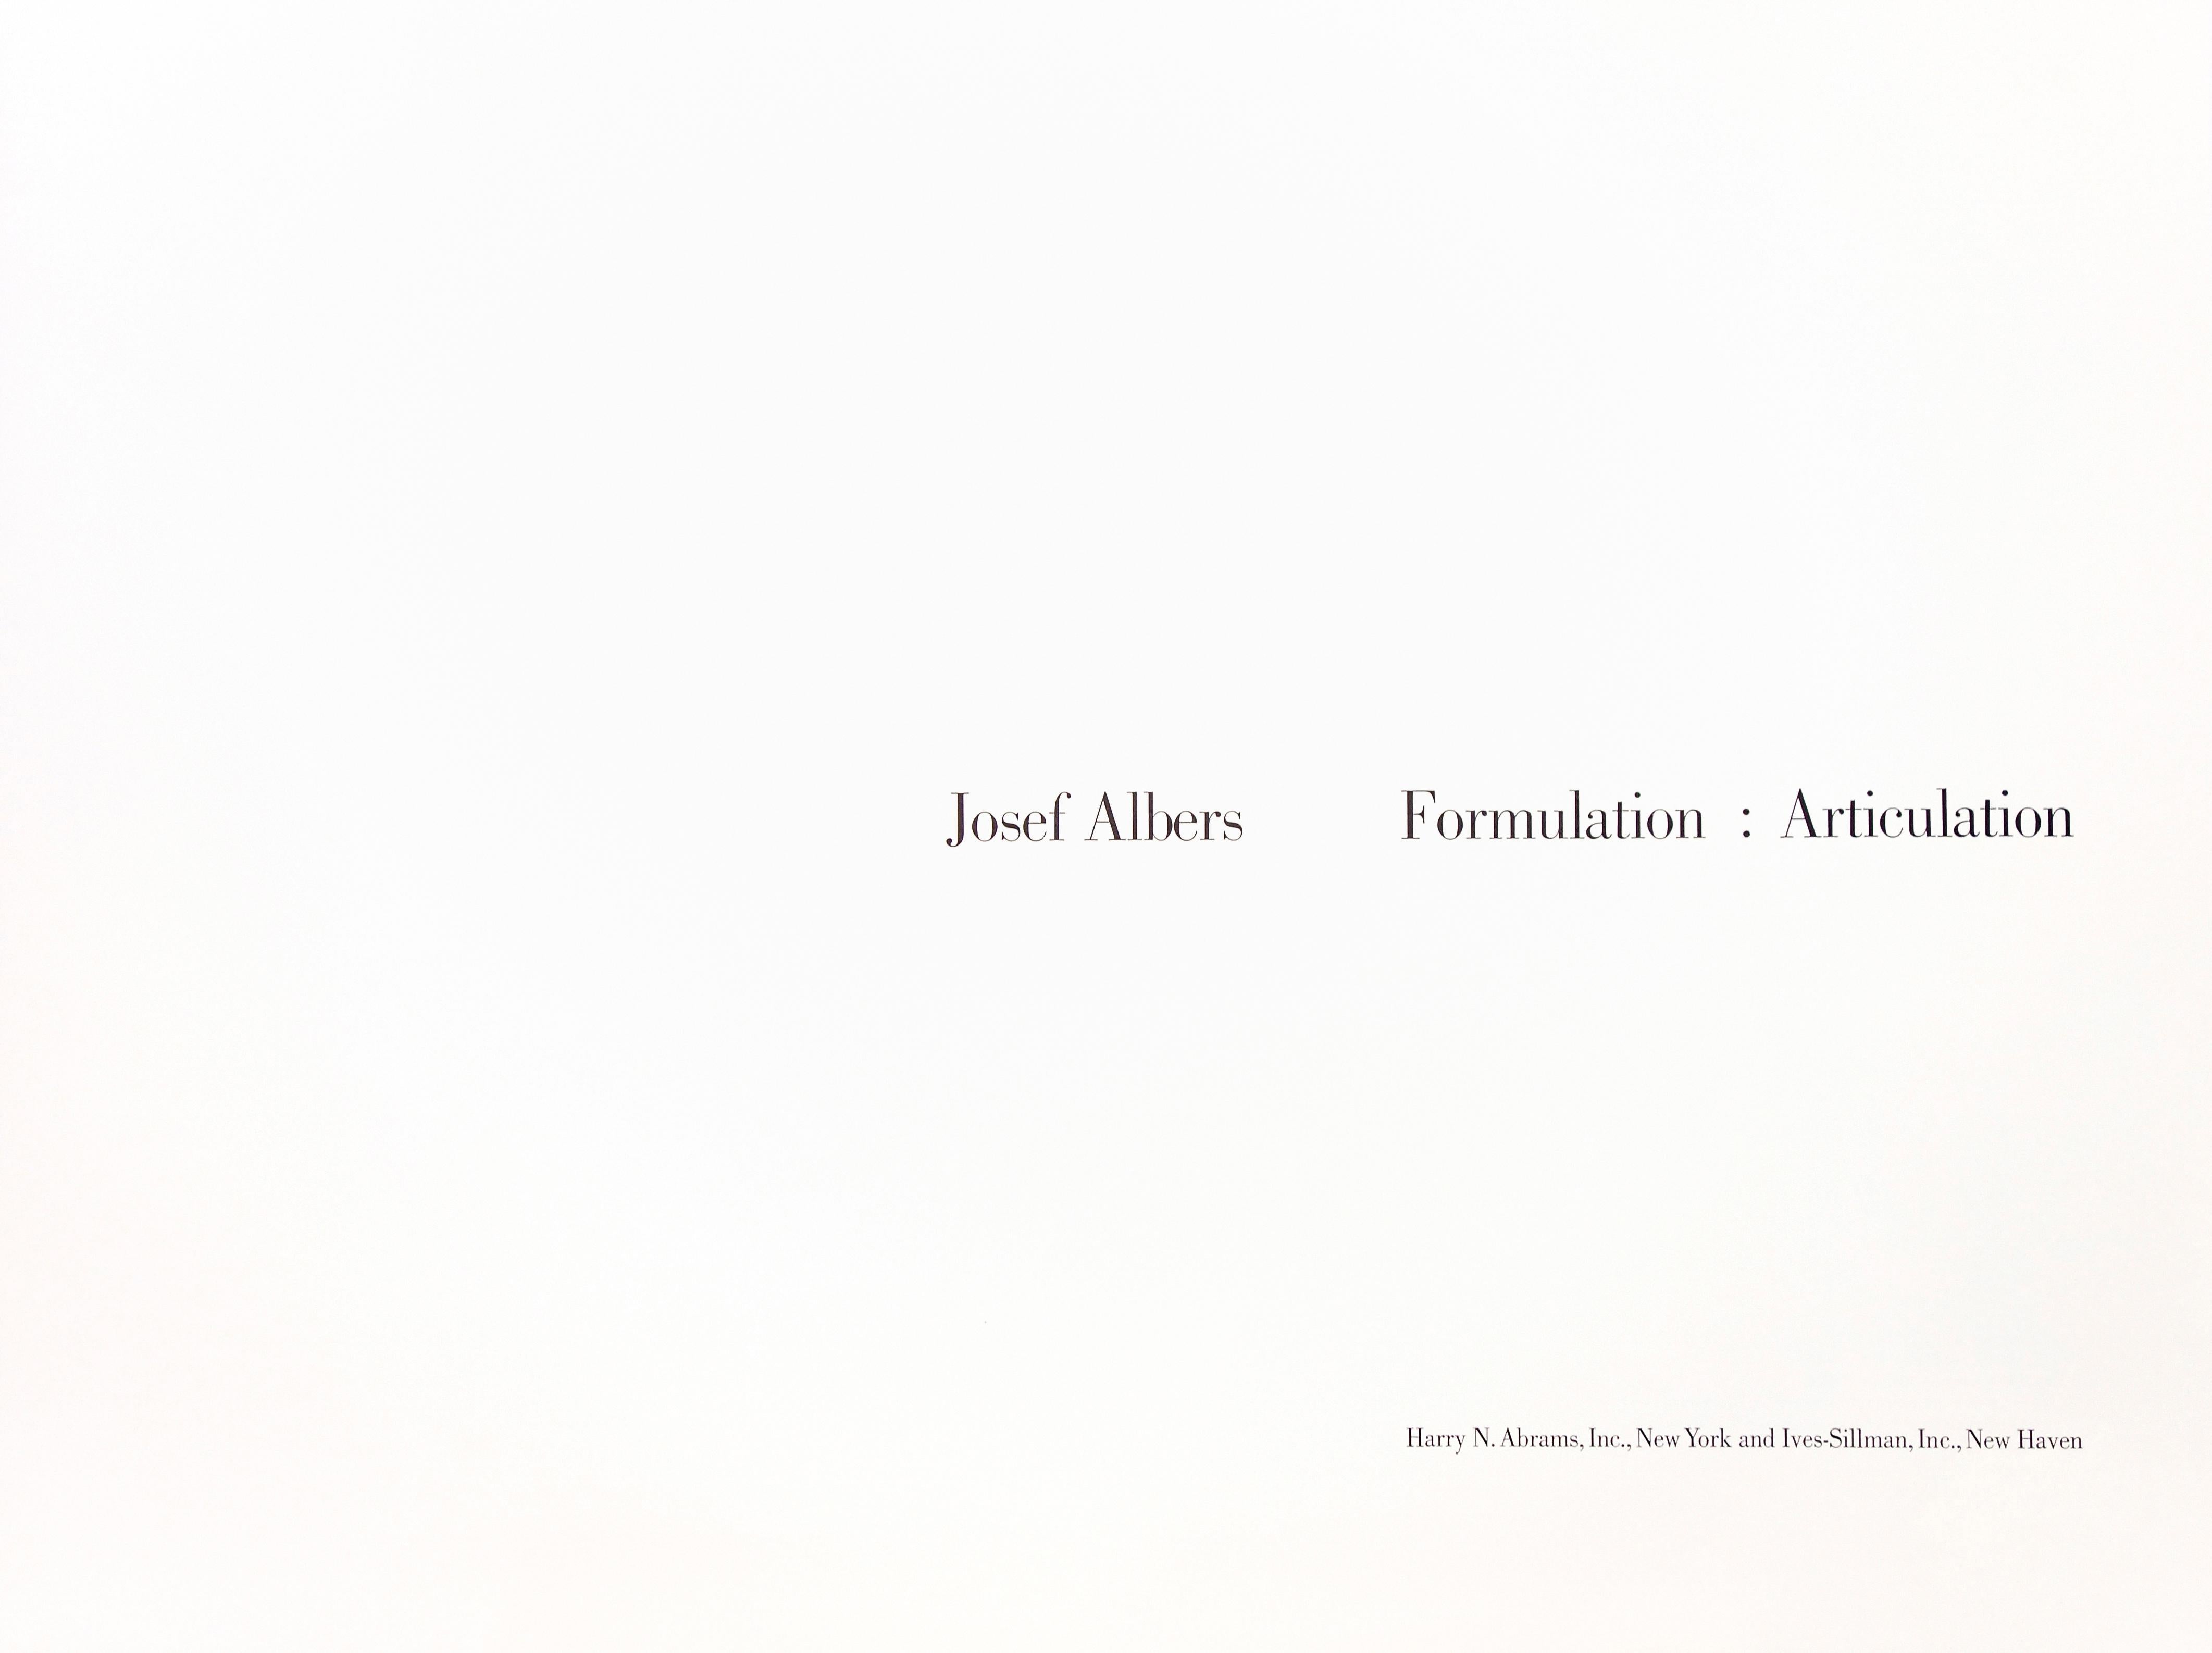 Formulation : Articulation Portfolio II Folder 9 (A) - Abstract Print by Josef Albers